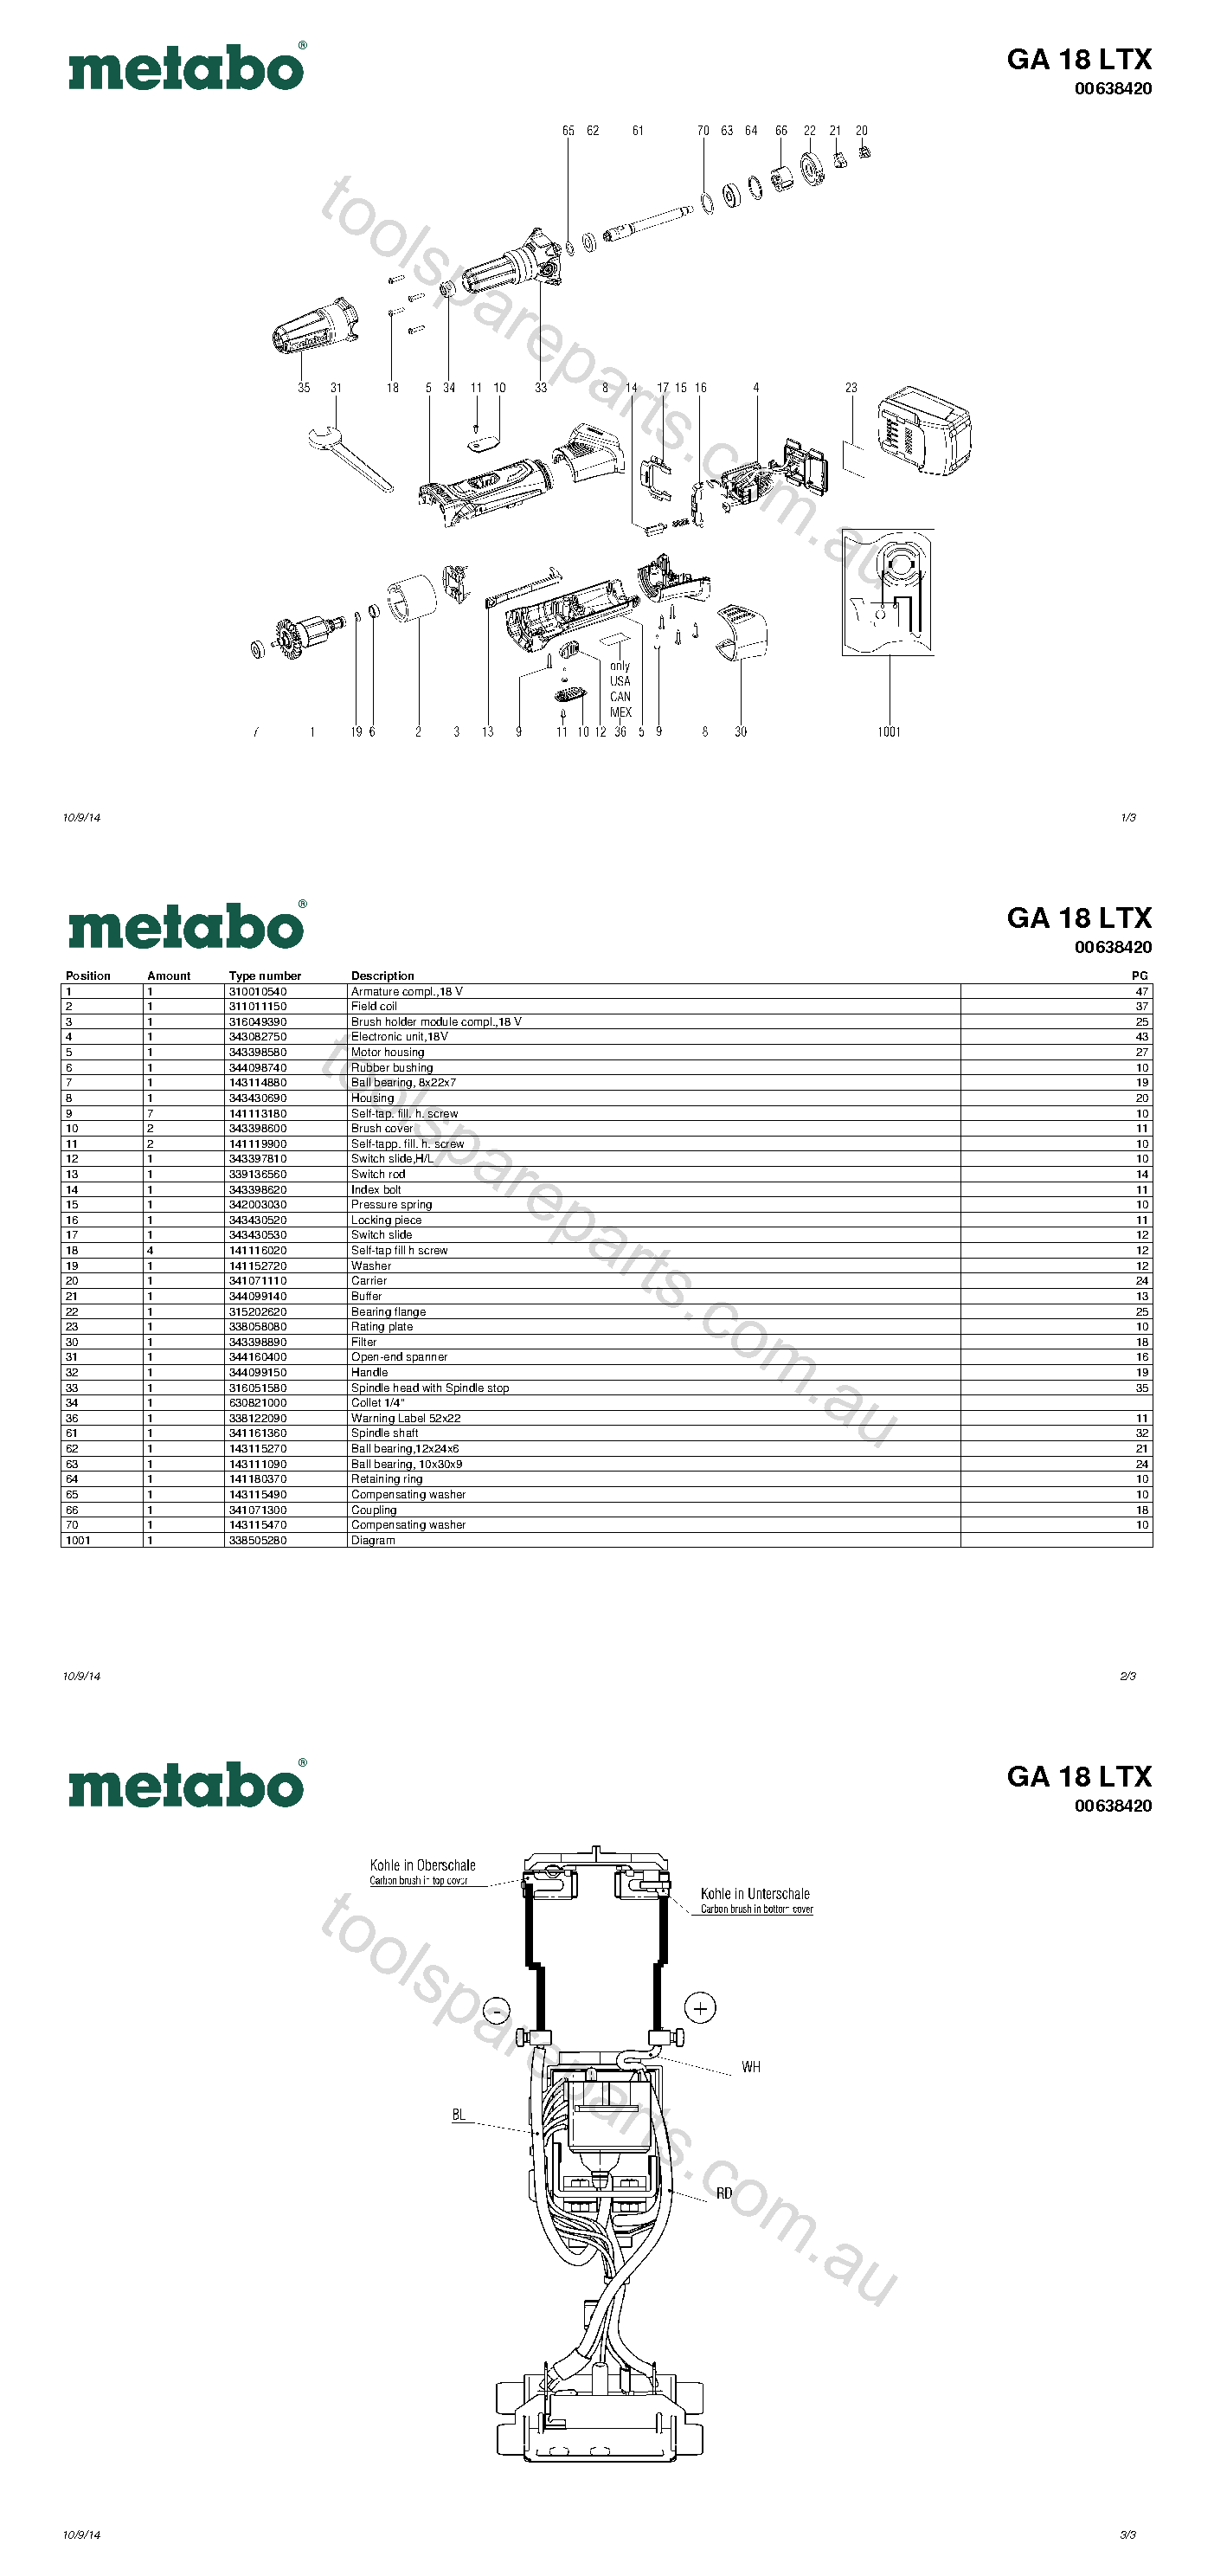 Metabo GA 18 LTX 00638420  Diagram 1